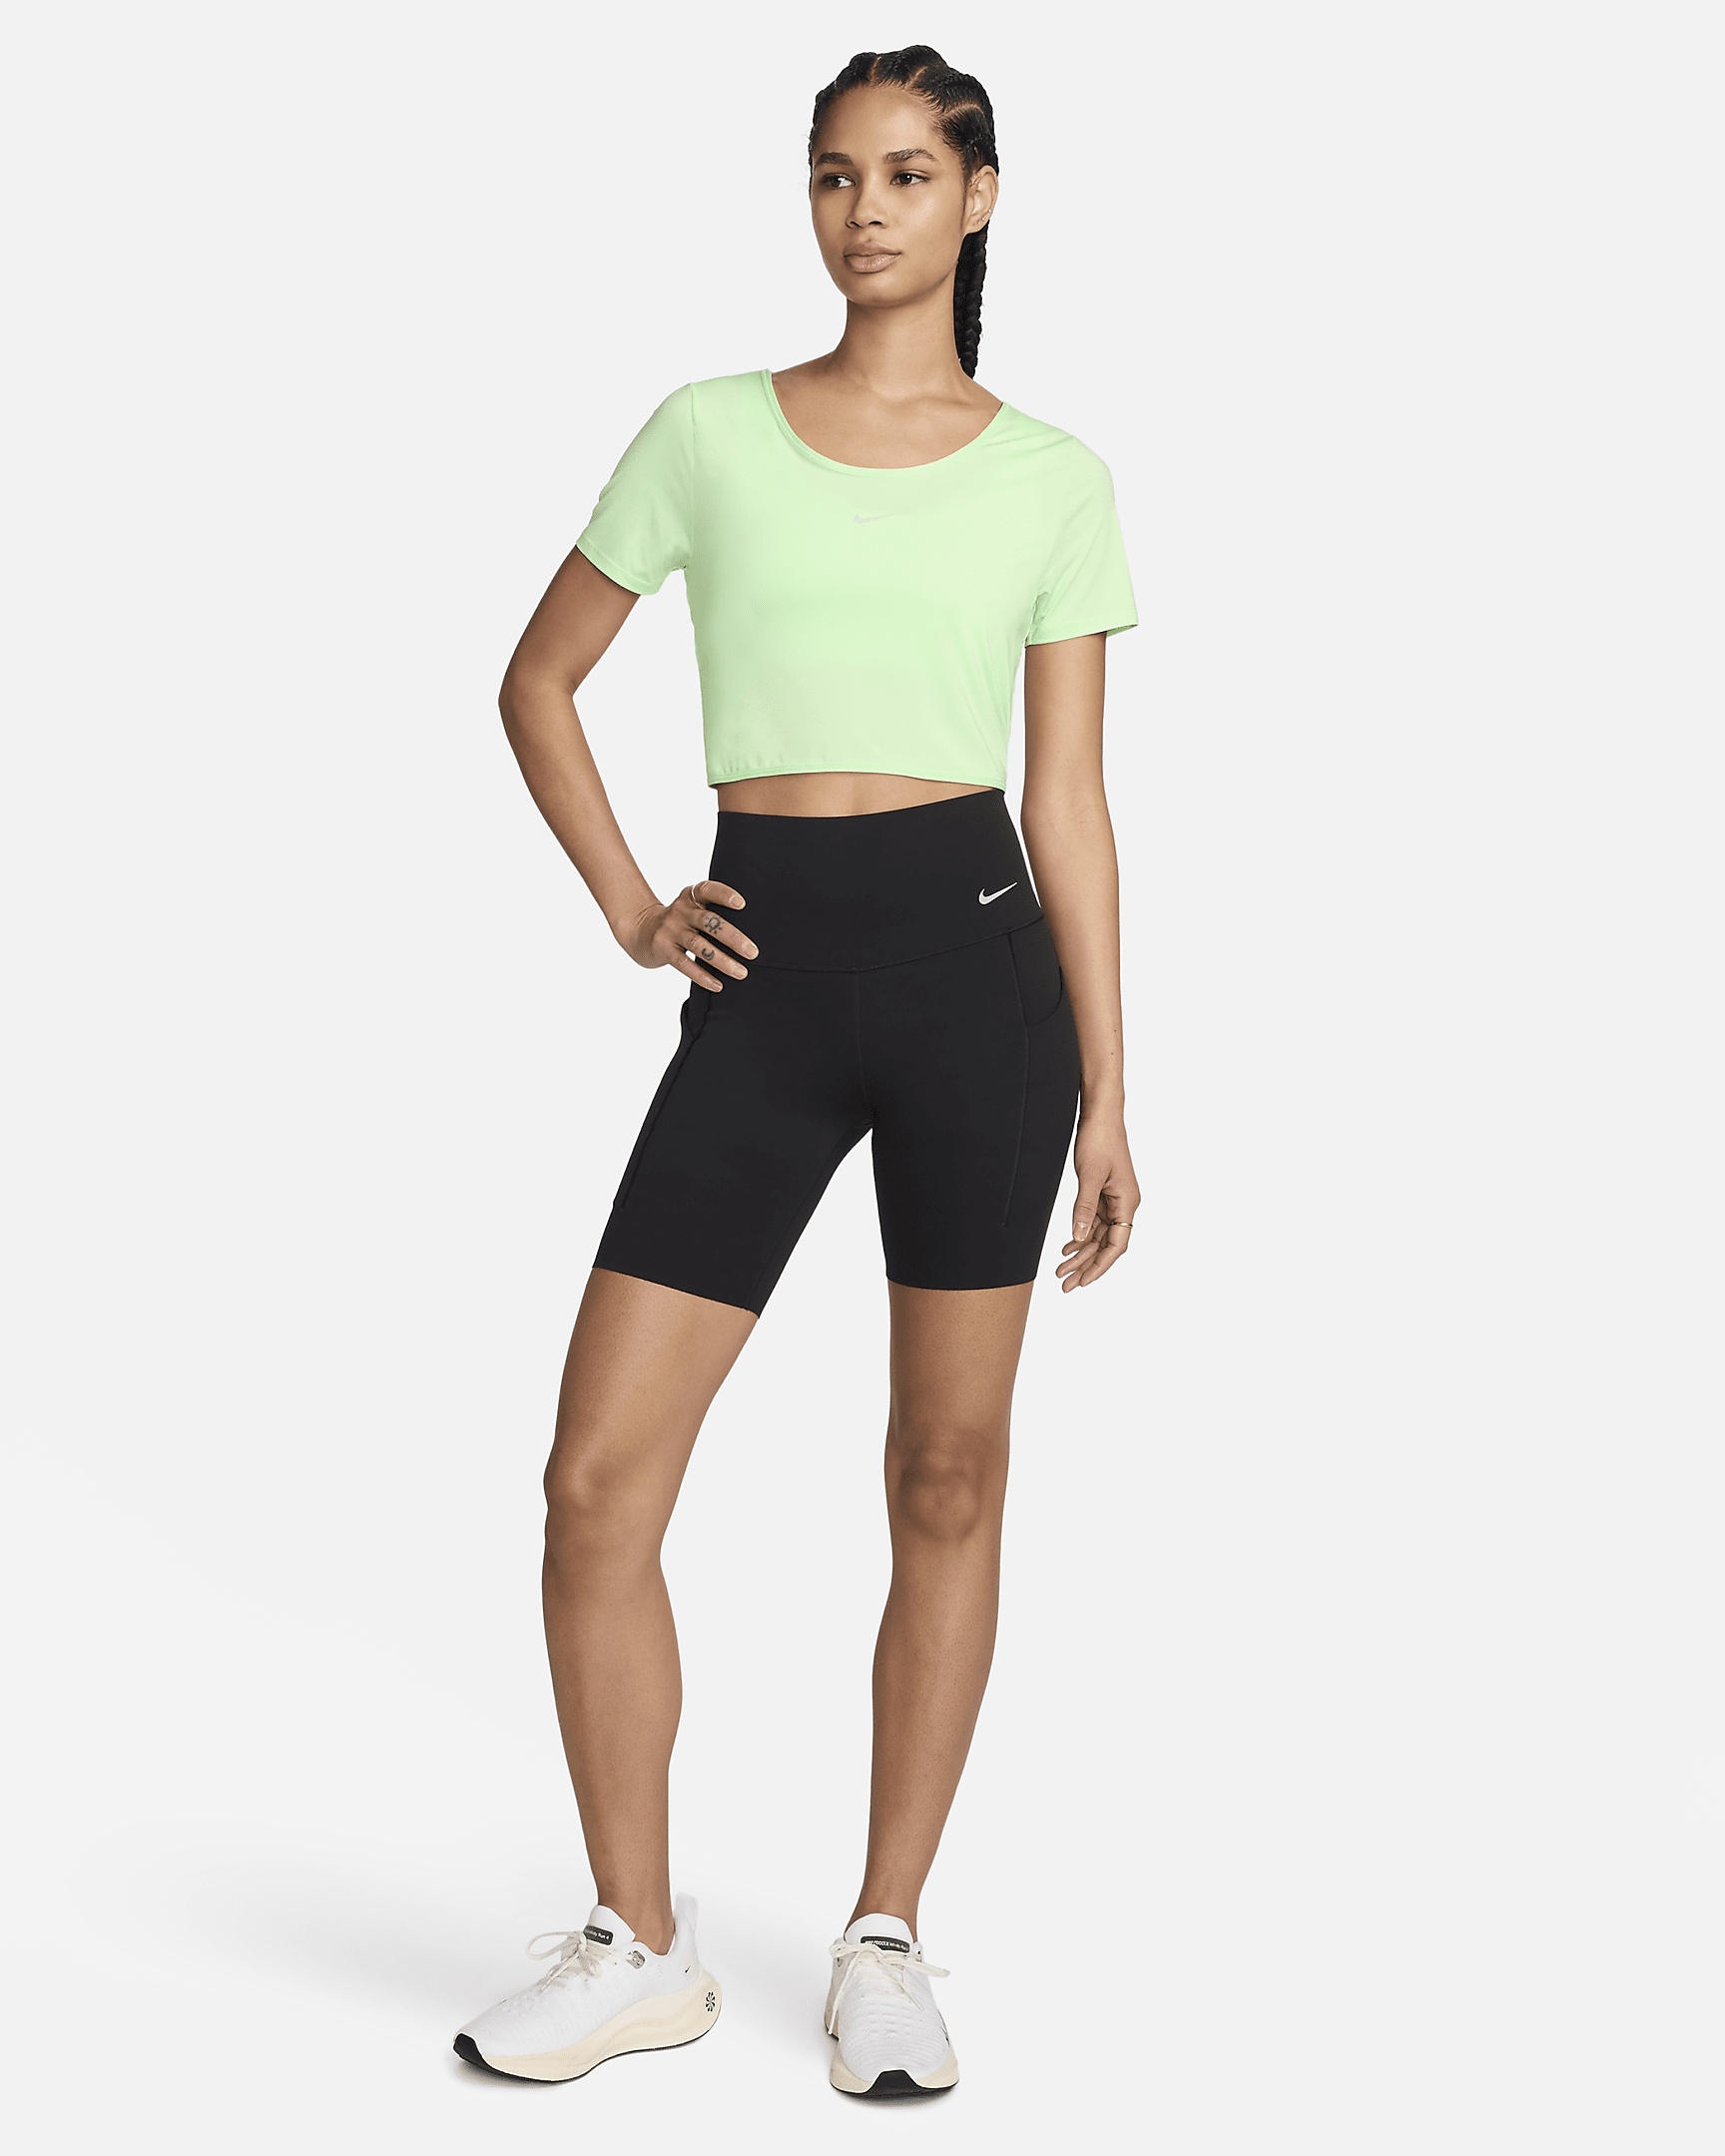 Nike Women's One Classic Dri-FIT Short-Sleeve Cropped Twist Top - 5